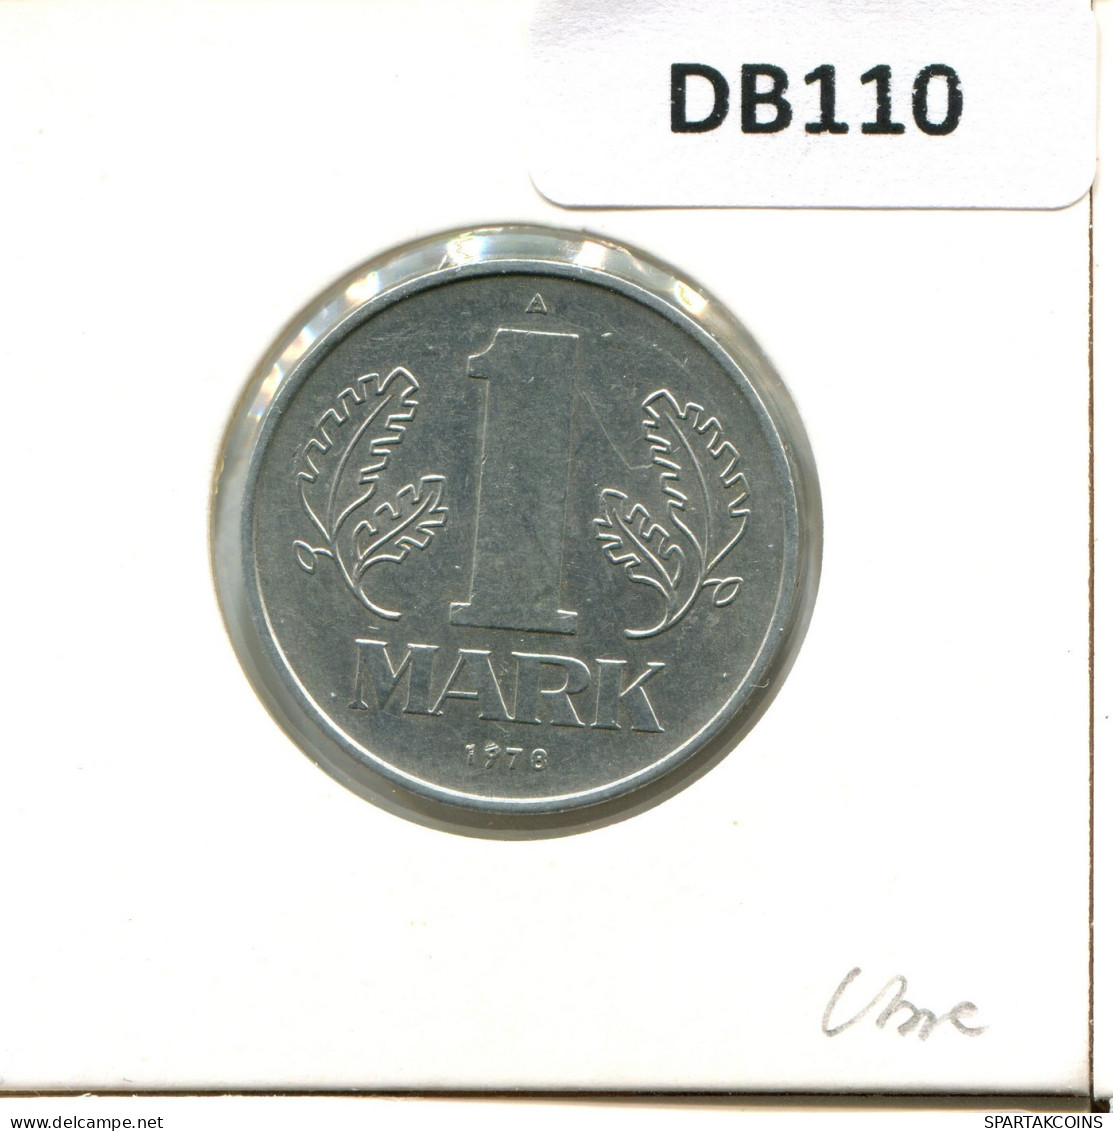 1 MARK 1978 A DDR EAST ALEMANIA Moneda GERMANY #DB110.E.A - 1 Mark